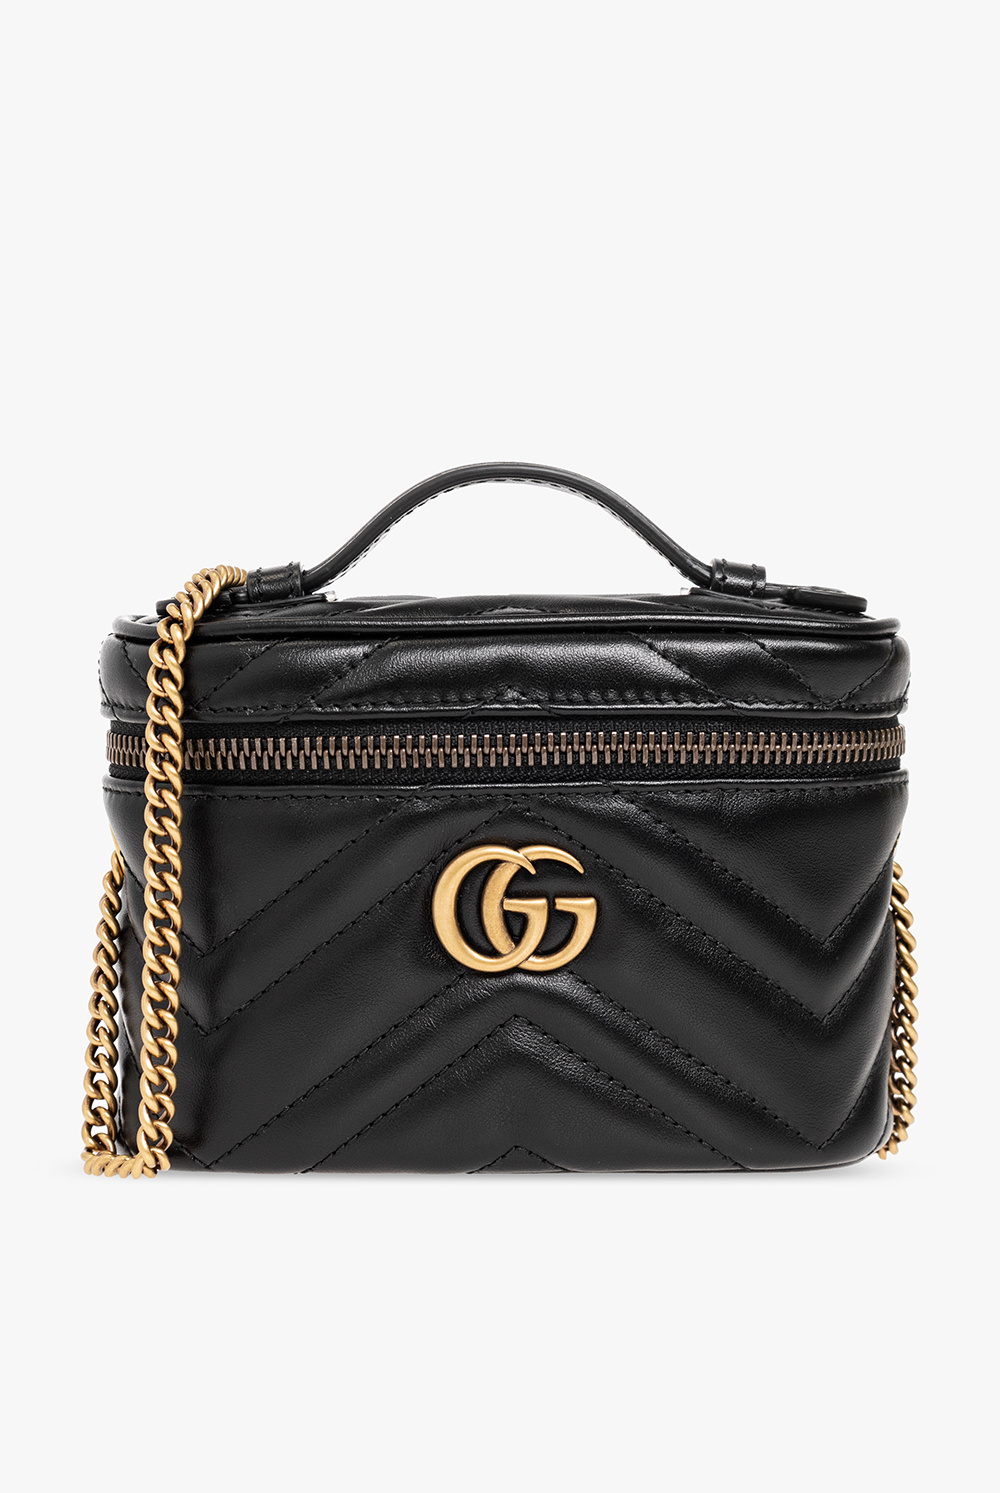 Mini gg marmont 2.0 leather shoulder bag - Gucci - Women